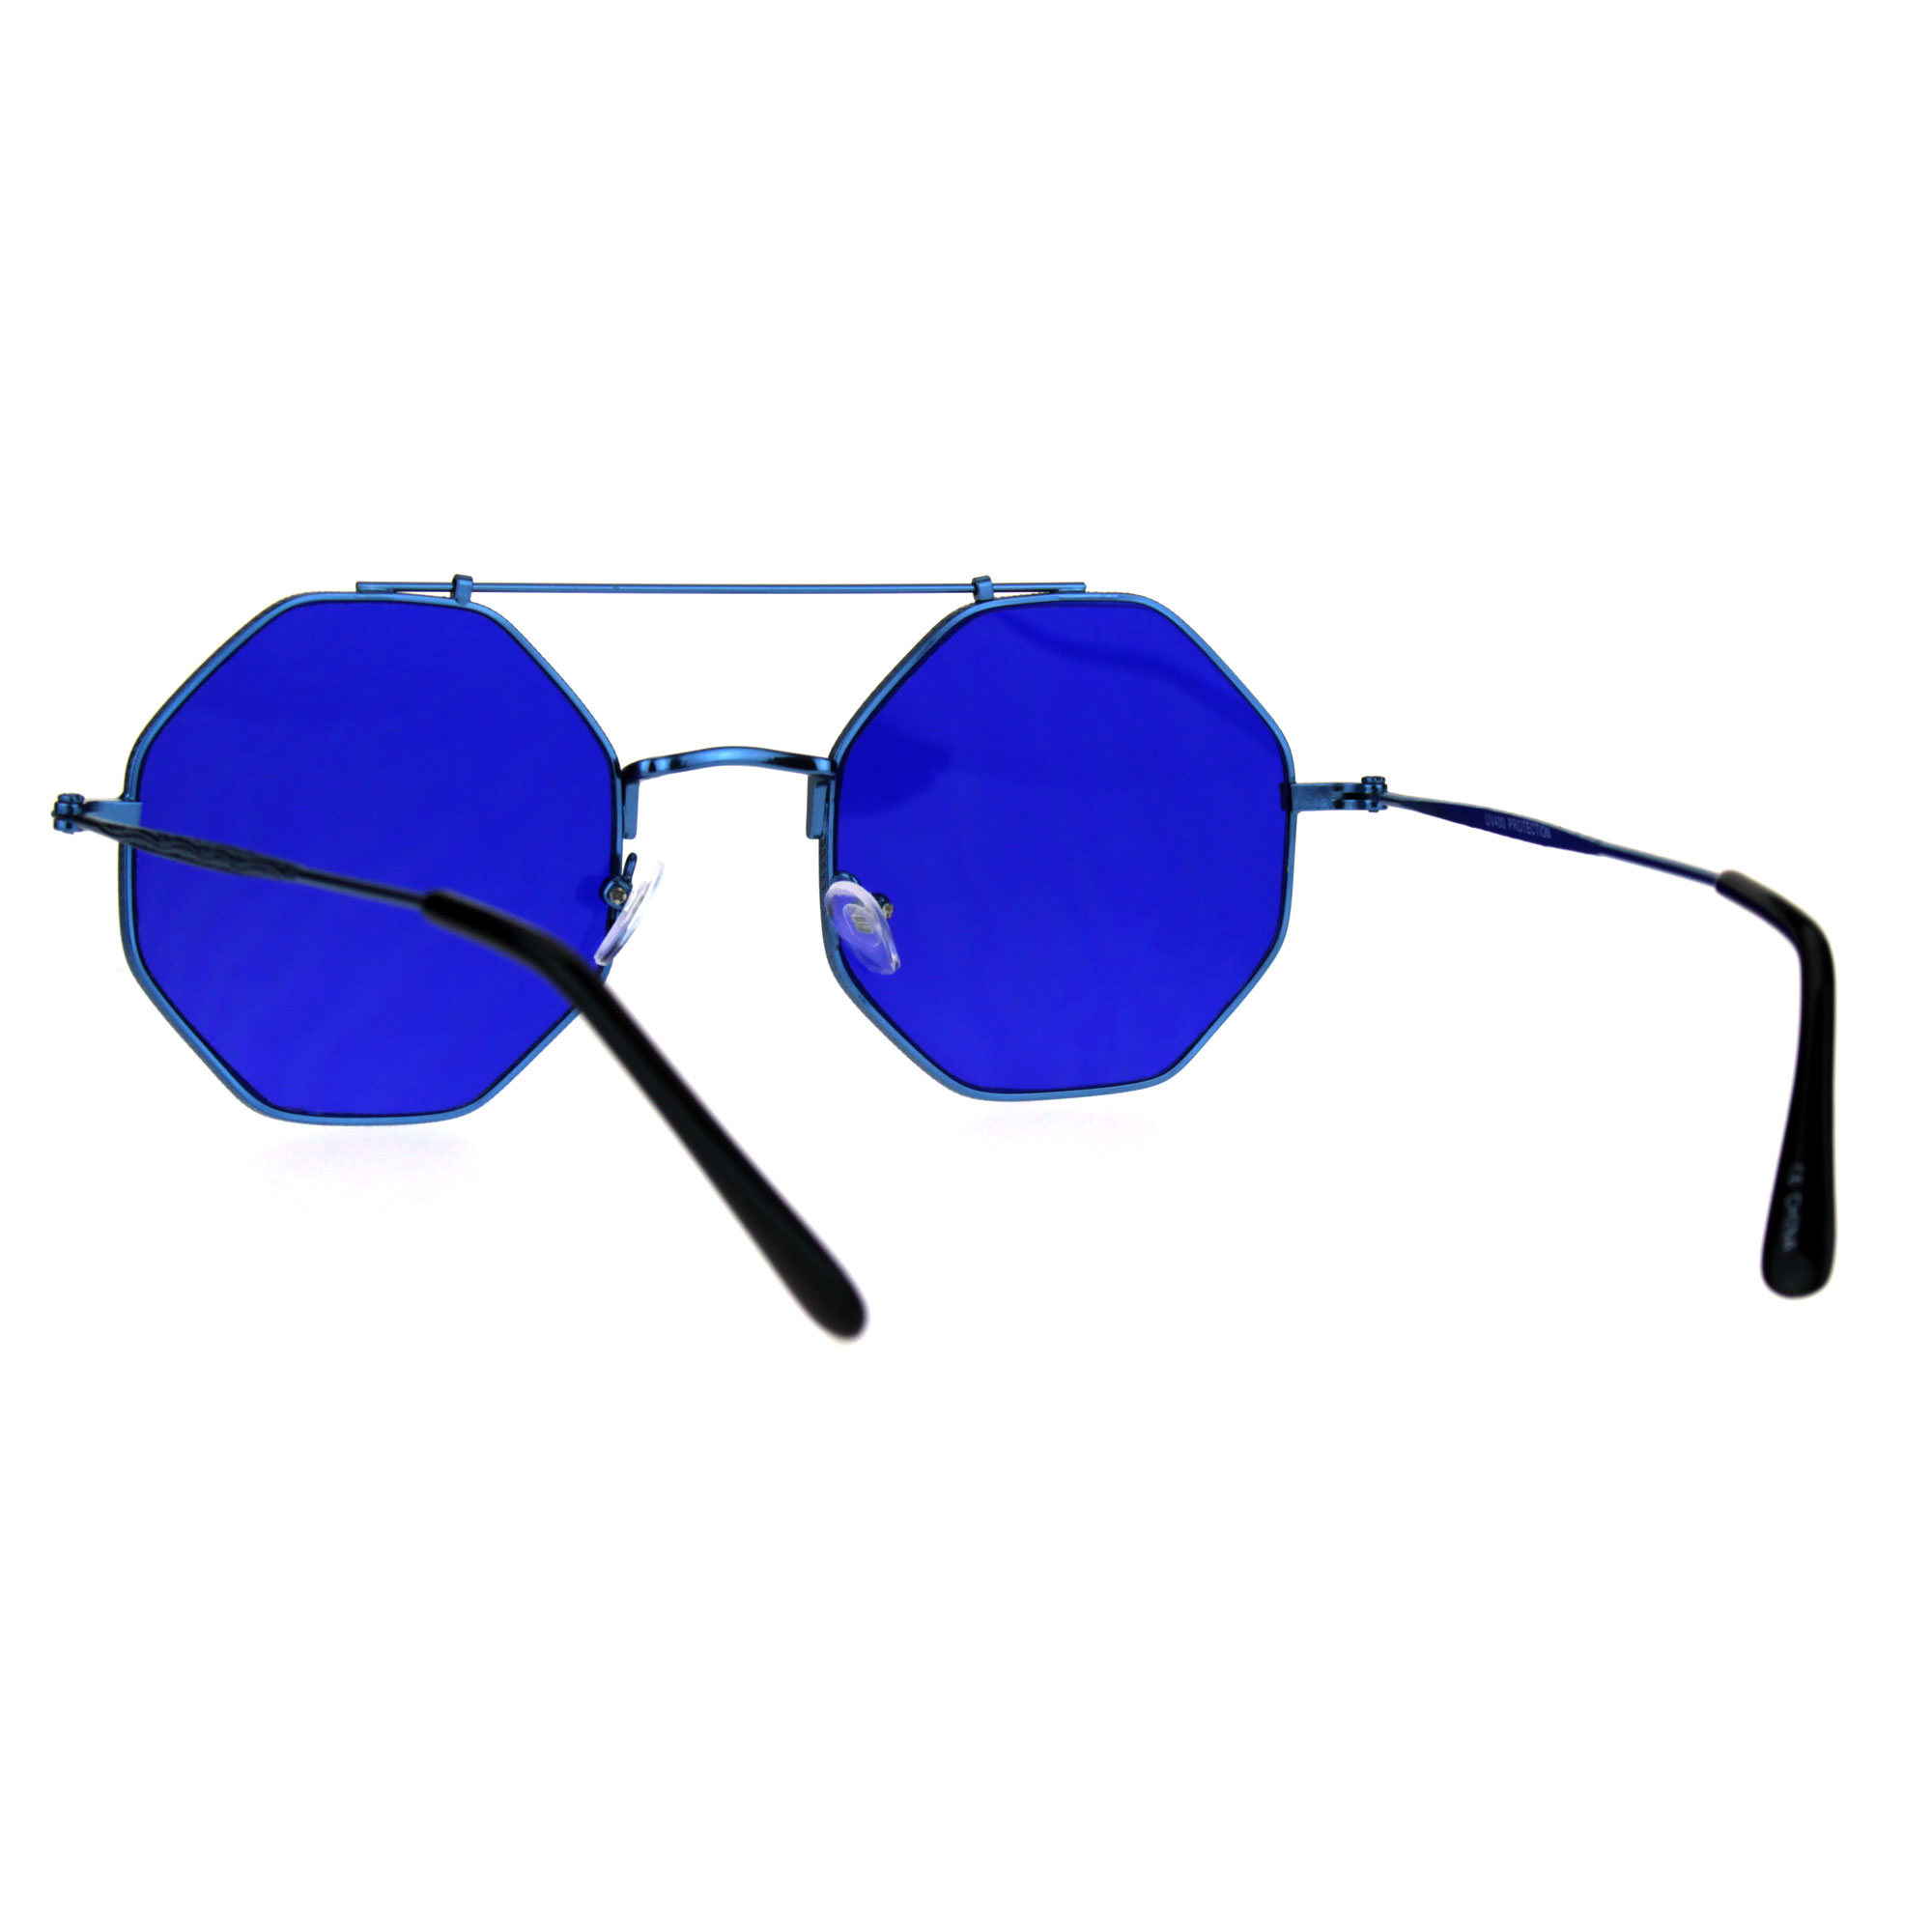 Round Octagonal Classic Sunglasses Man Woman Silver Metal Frame Baby Blue  Nuanced Lens Boho Hippy Retrò Style Medium Size, Occhiali 